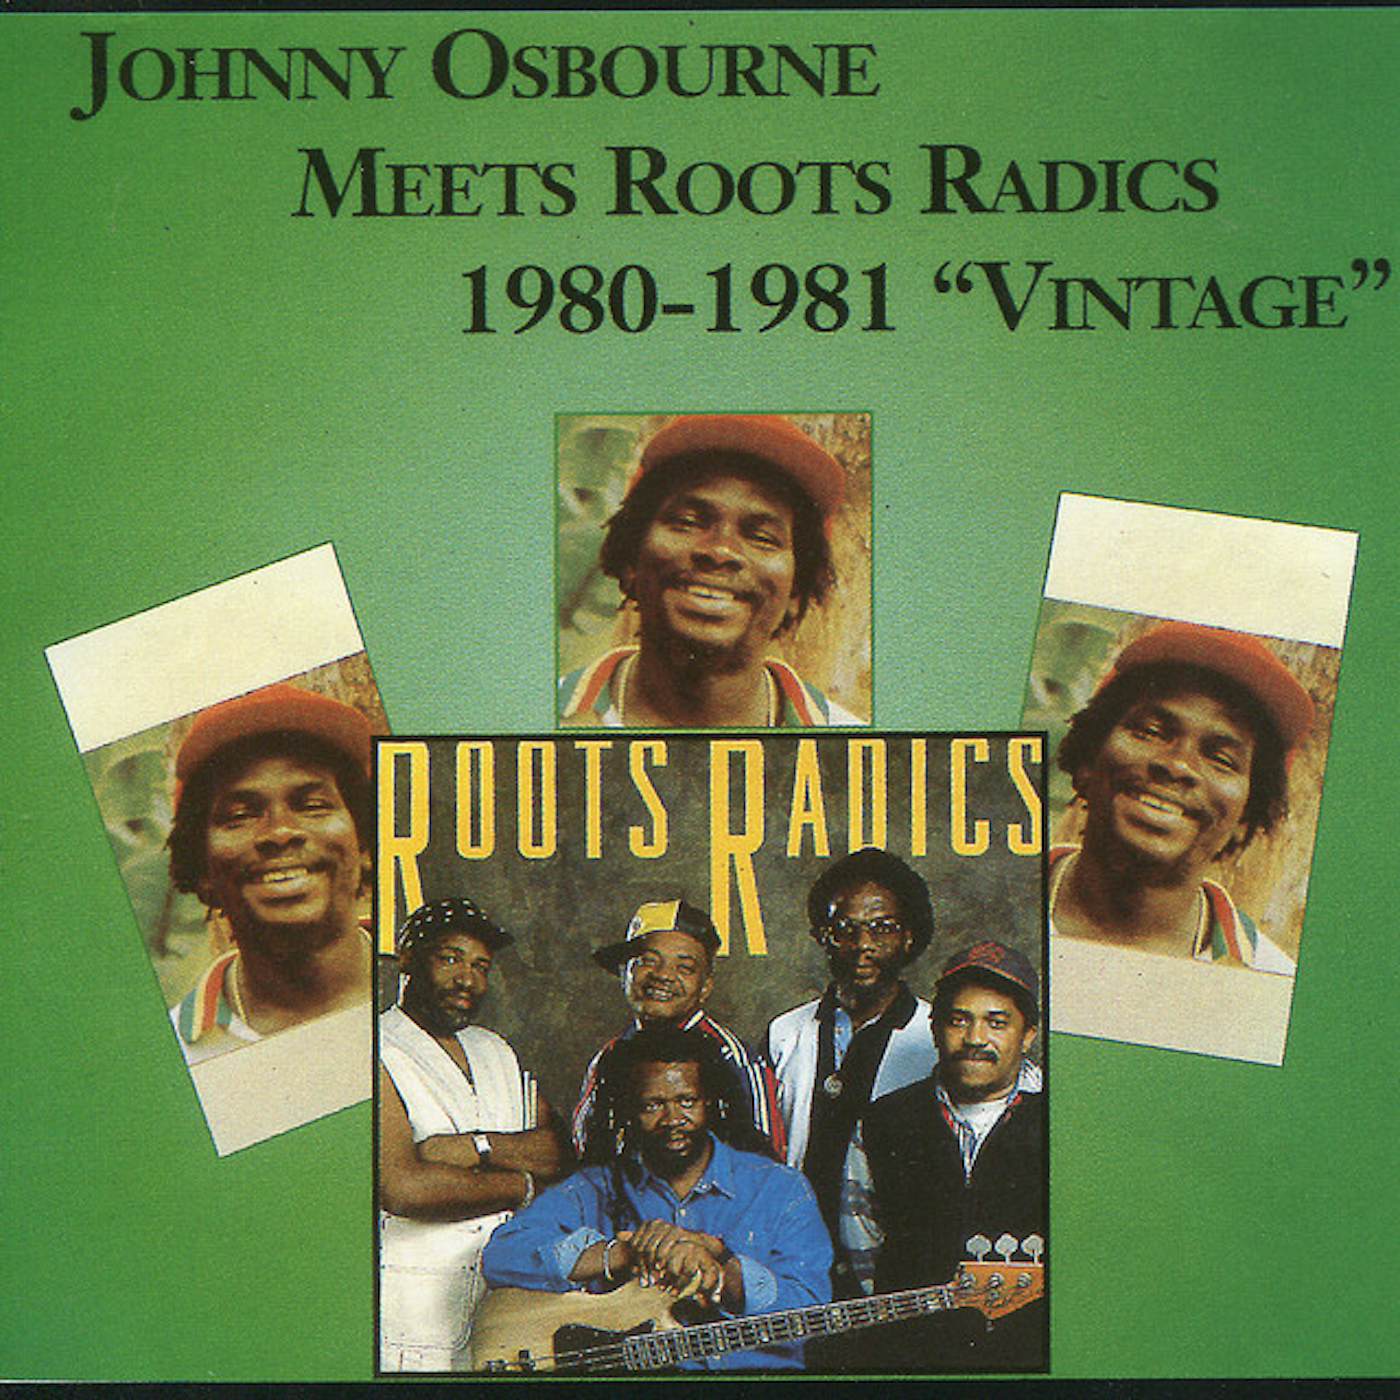 Johnny Osbourne MEETS ROOTS RADICS 1980-1981 Vinyl Record